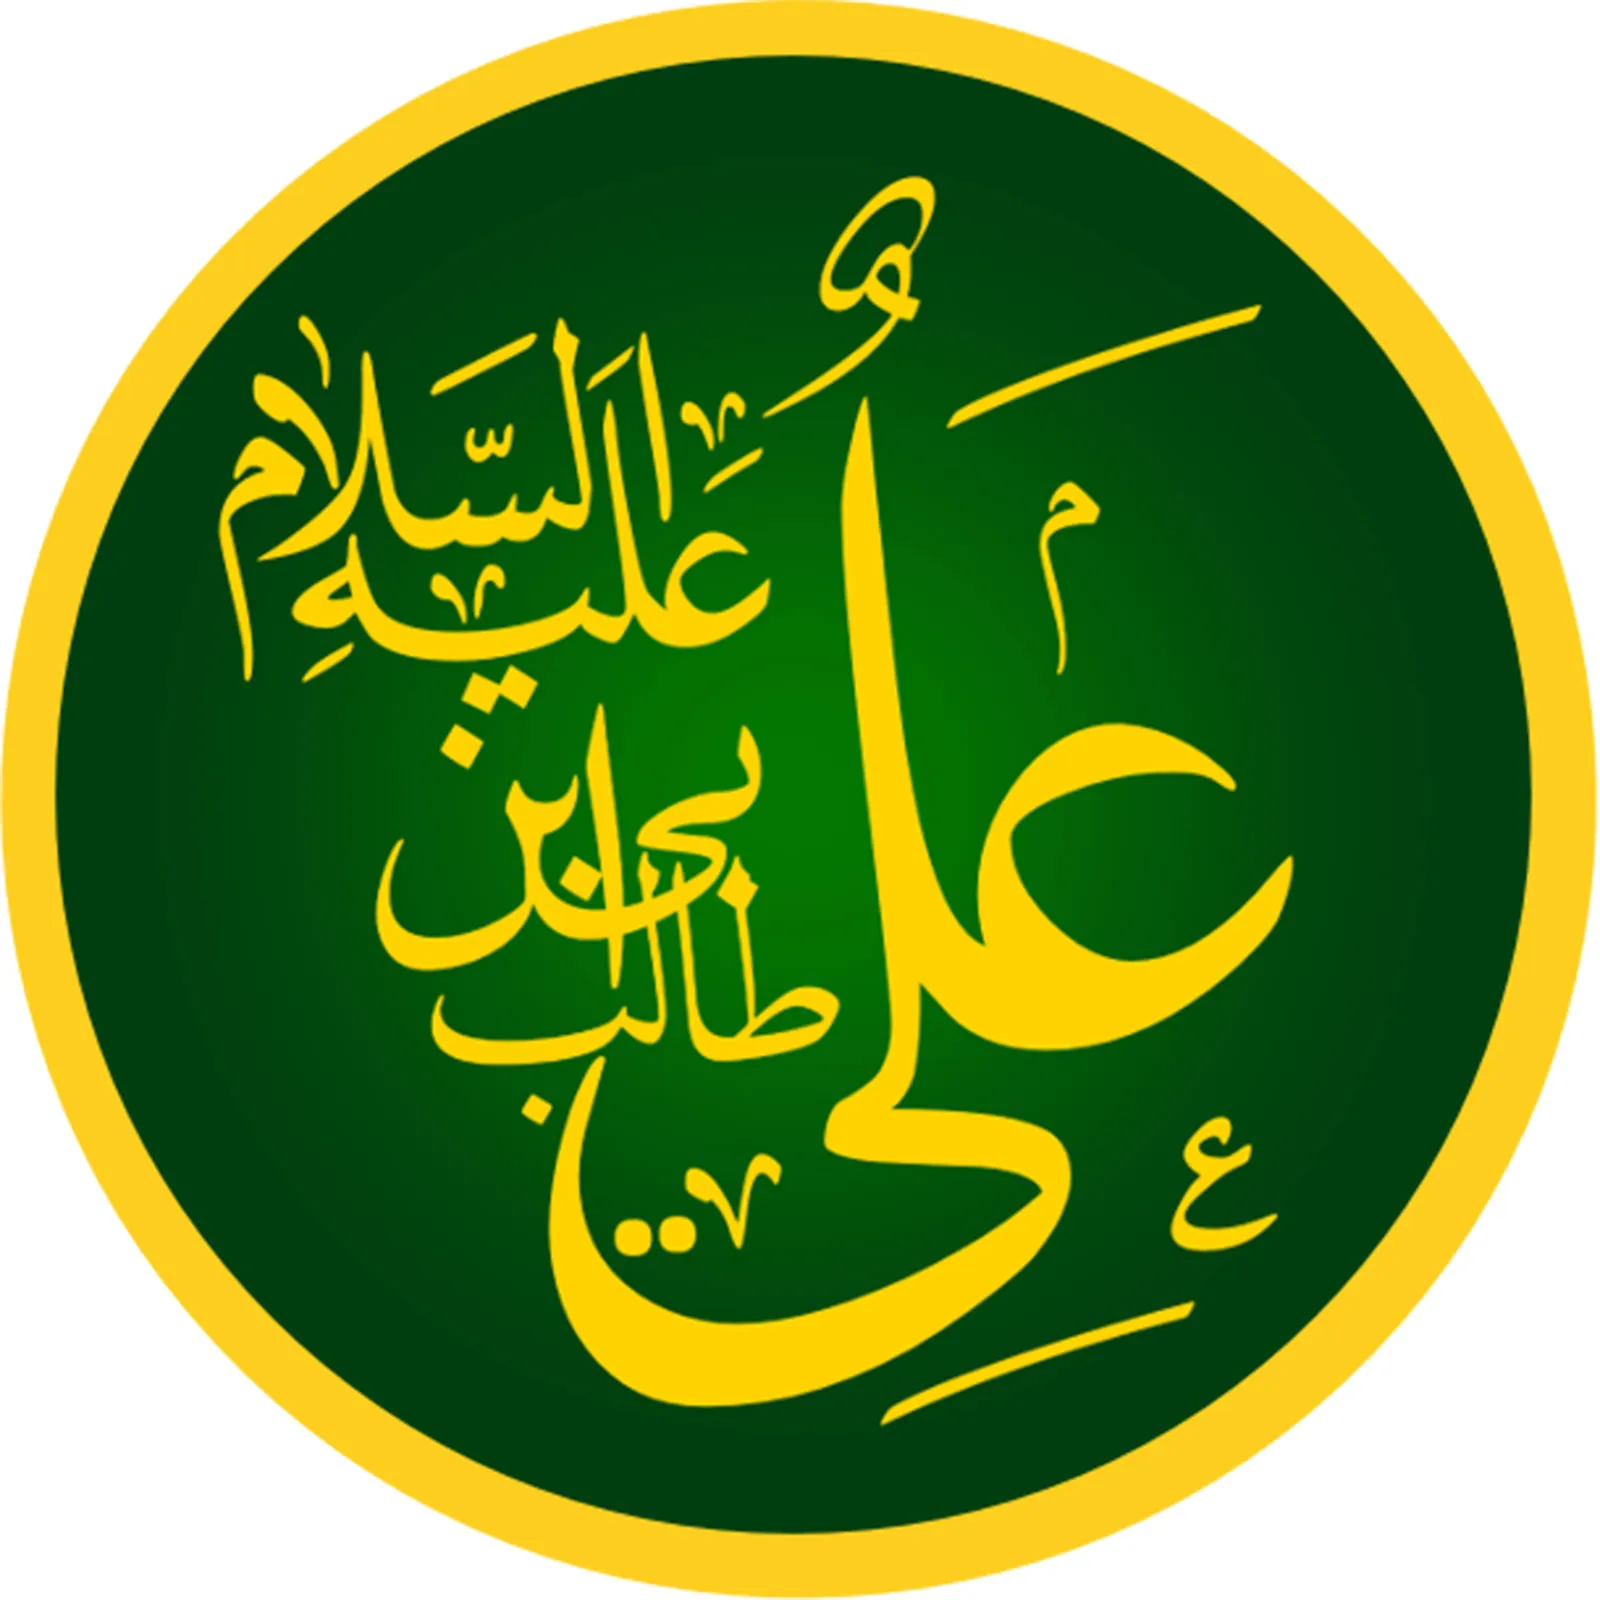 Ali Ibn Abi Talib – The Fourth Caliph of Islam